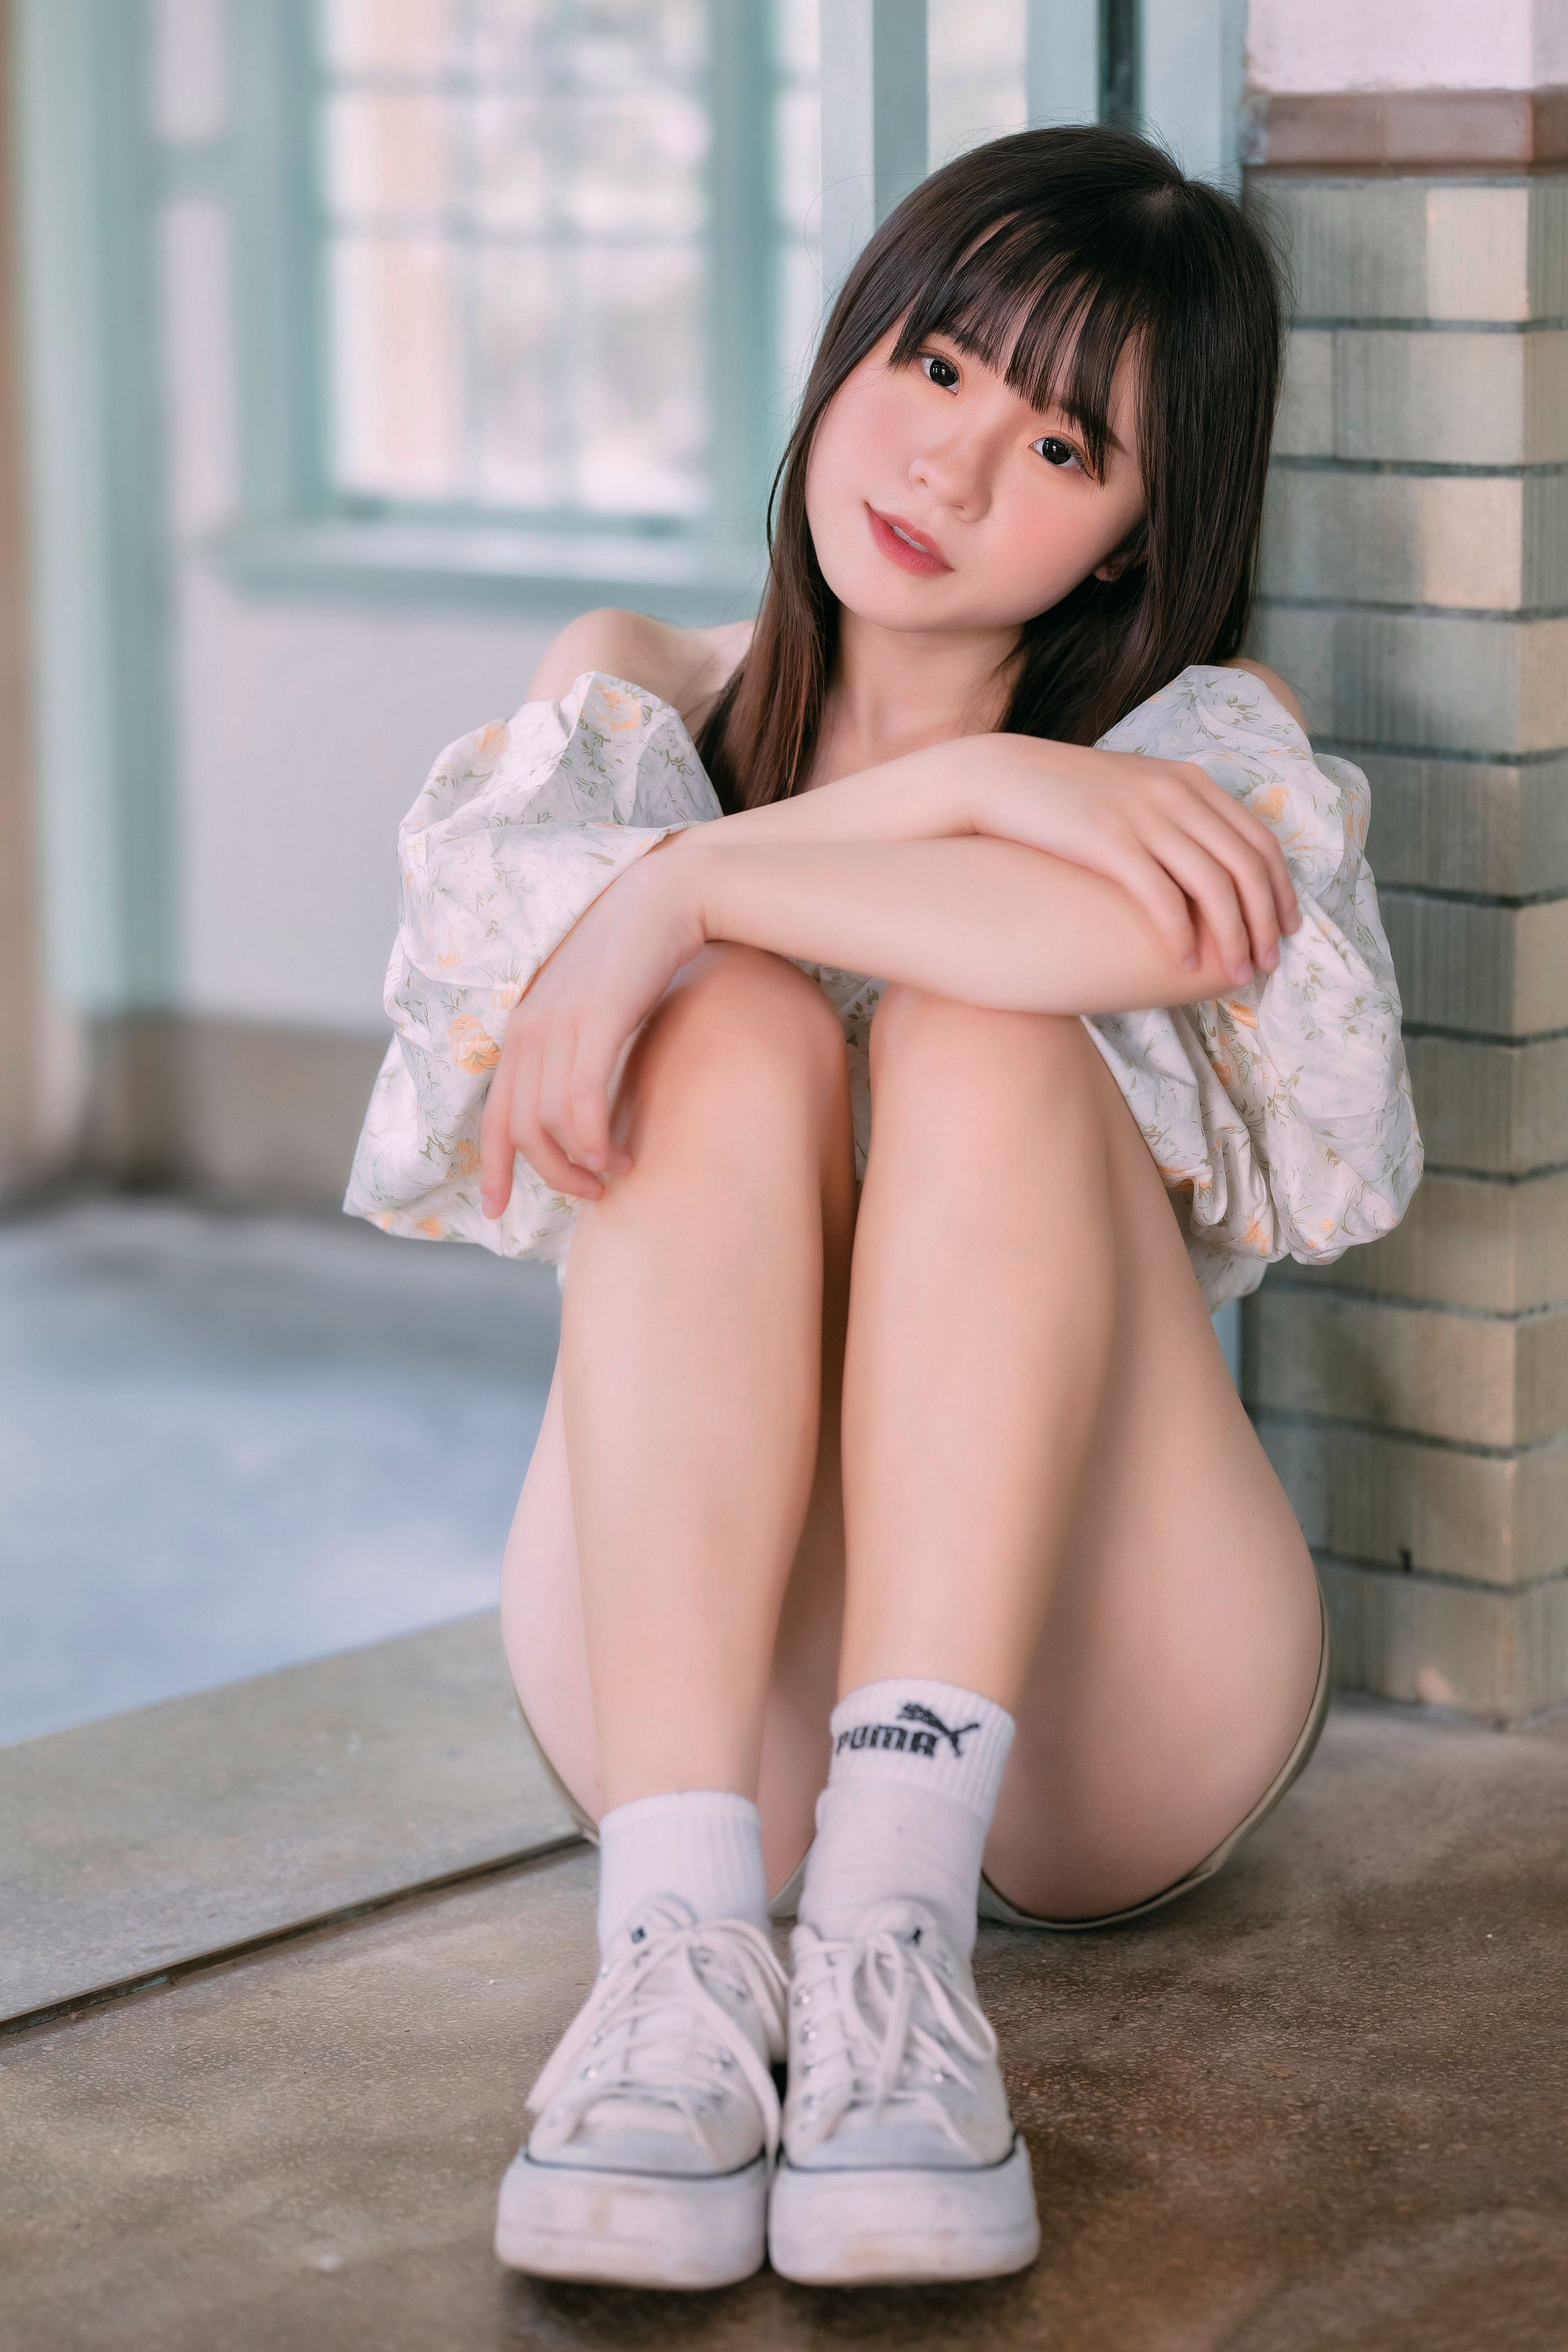 Asian Model Women Long Hair Dark Hair Sitting Sneakers Shorts Blouse Bricks Wall Window Bare Shoulde 2560x3840